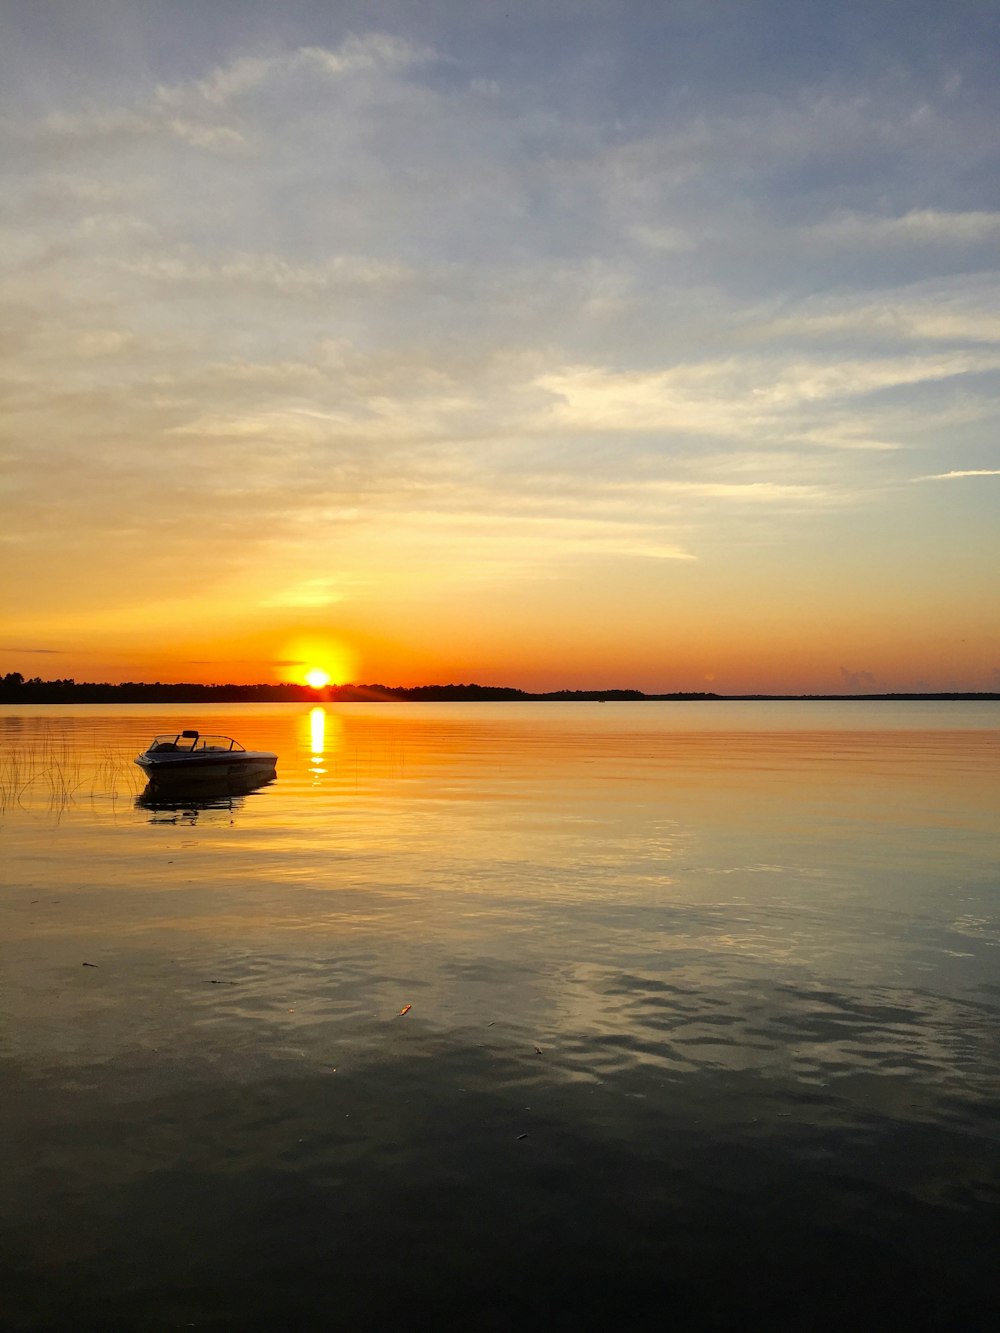 boat adrift away from shore during sunset